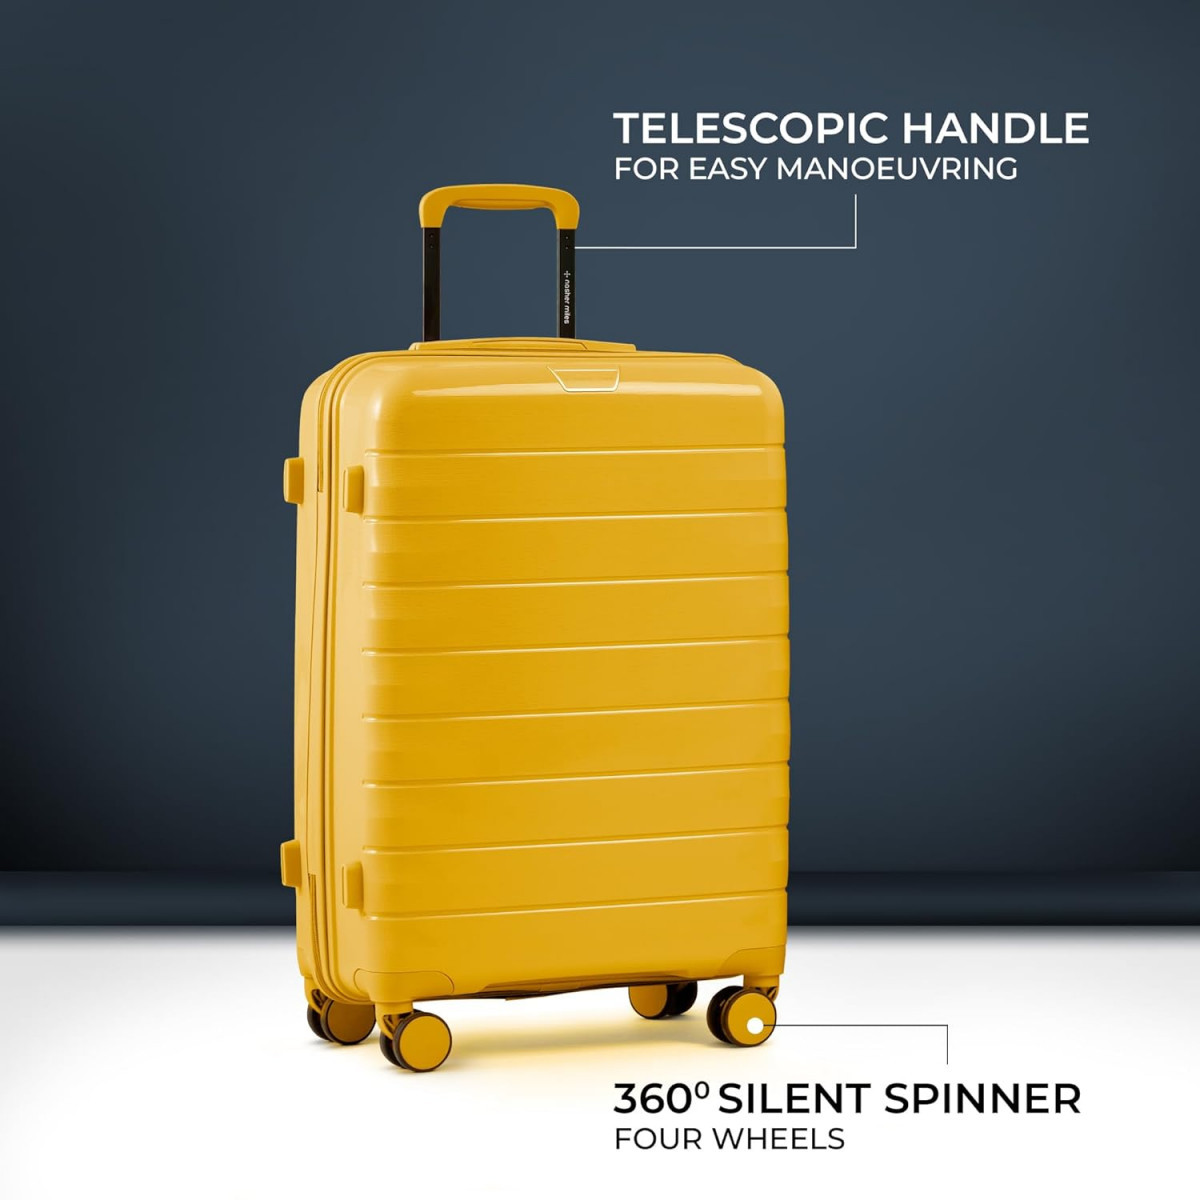 Nasher Miles Vienna Hard-Sided Polypropylene Cabin Luggage Mustard Yellow 20 inch 55cm Trolley Bag